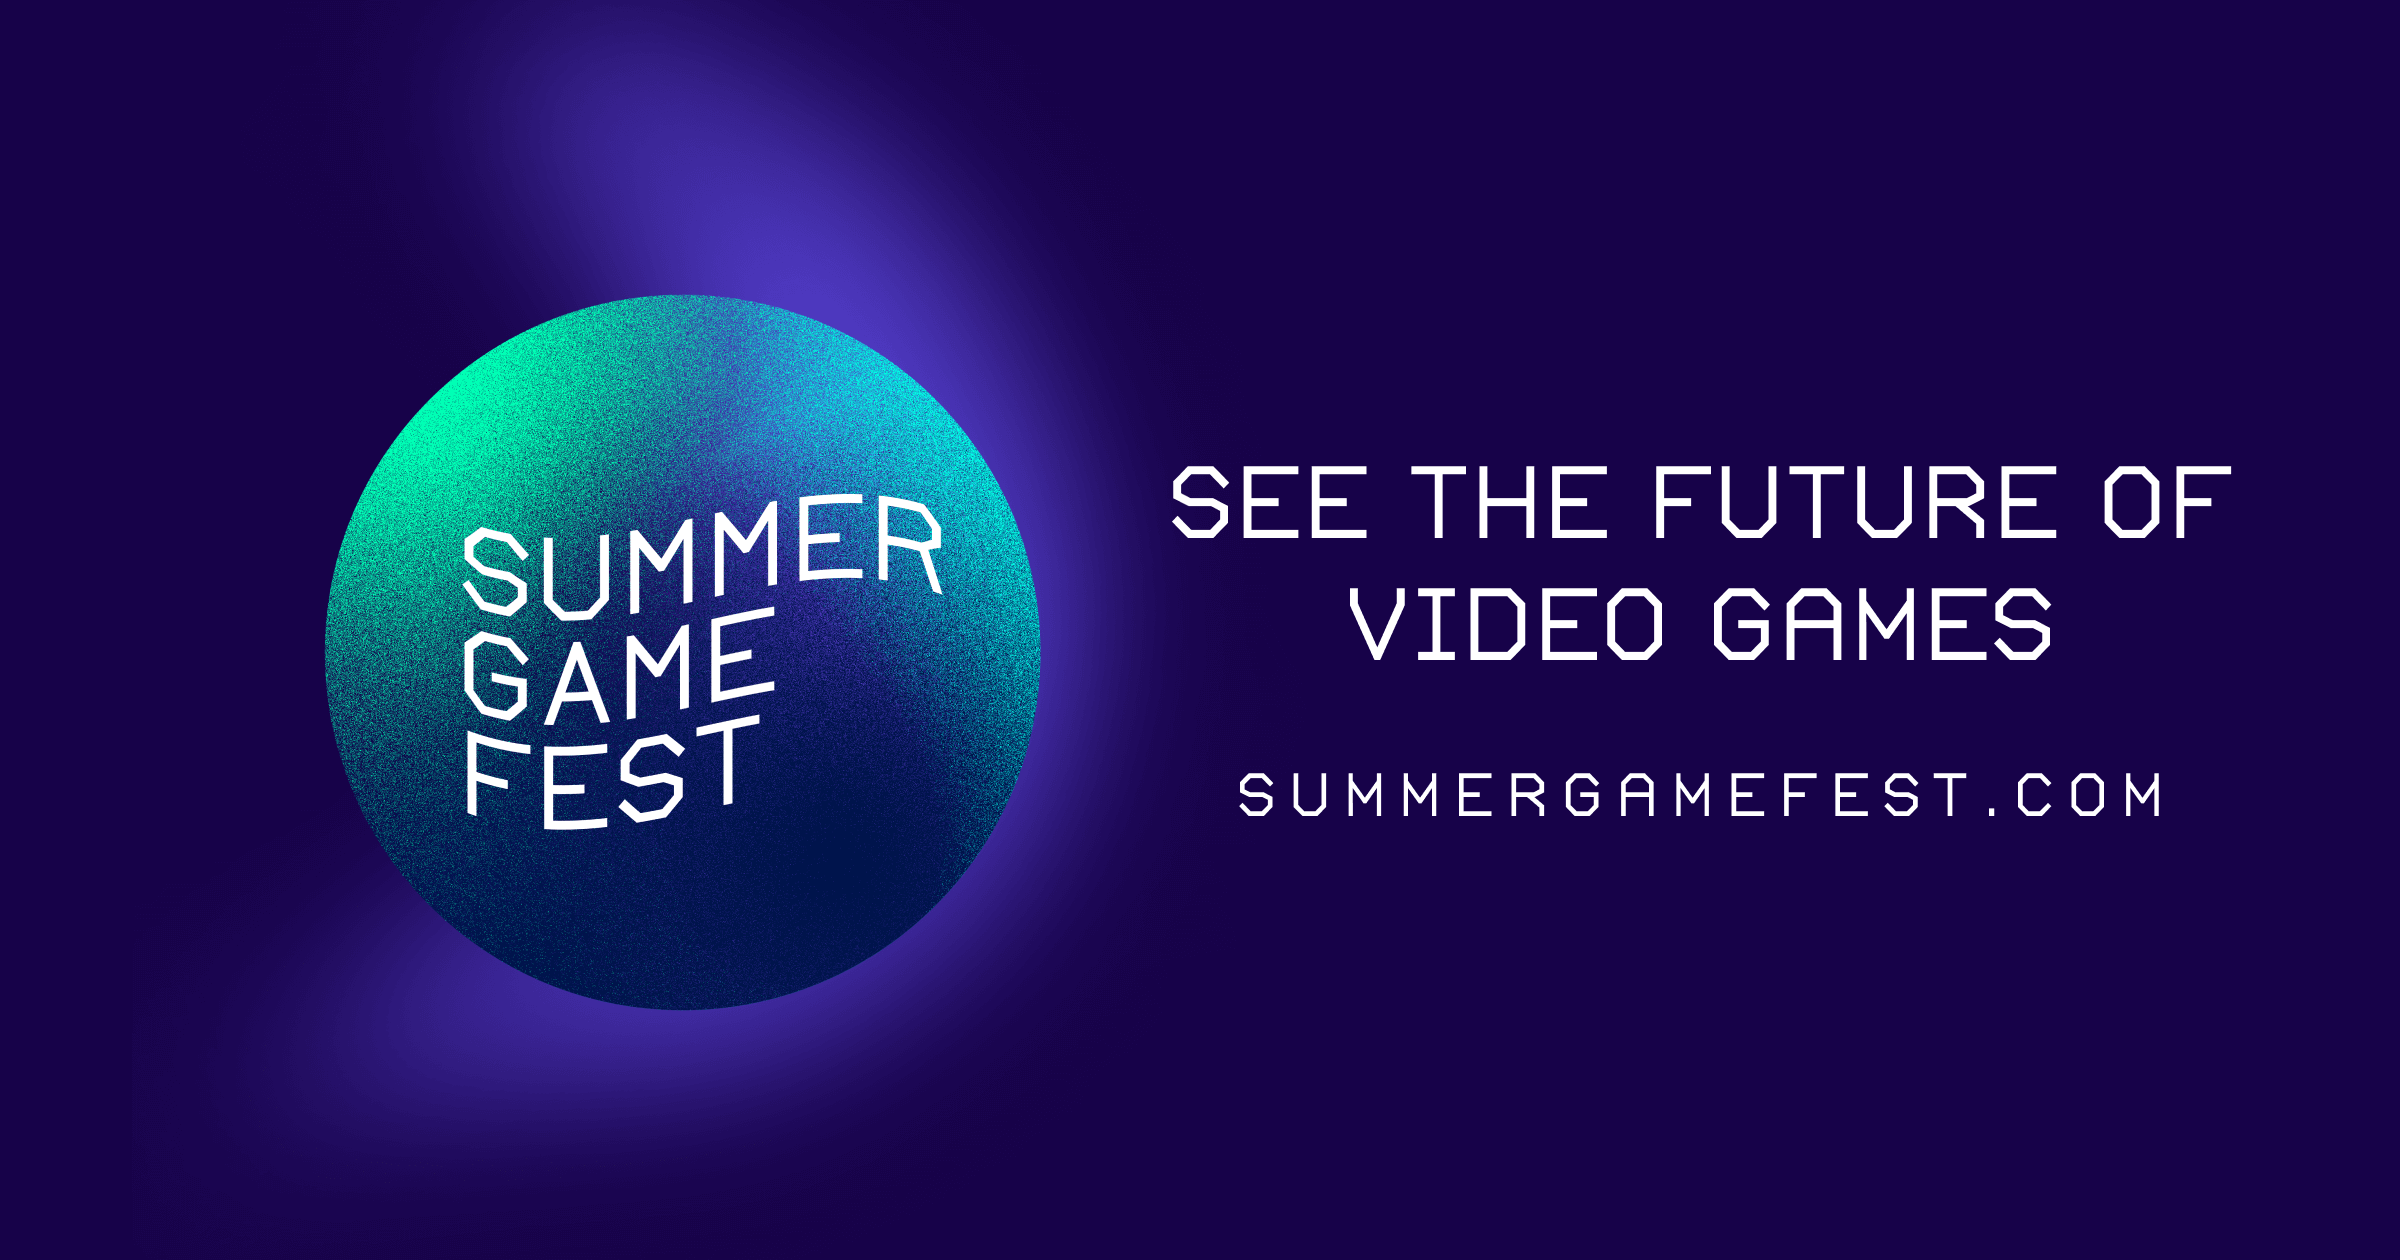 www.summergamefest.com